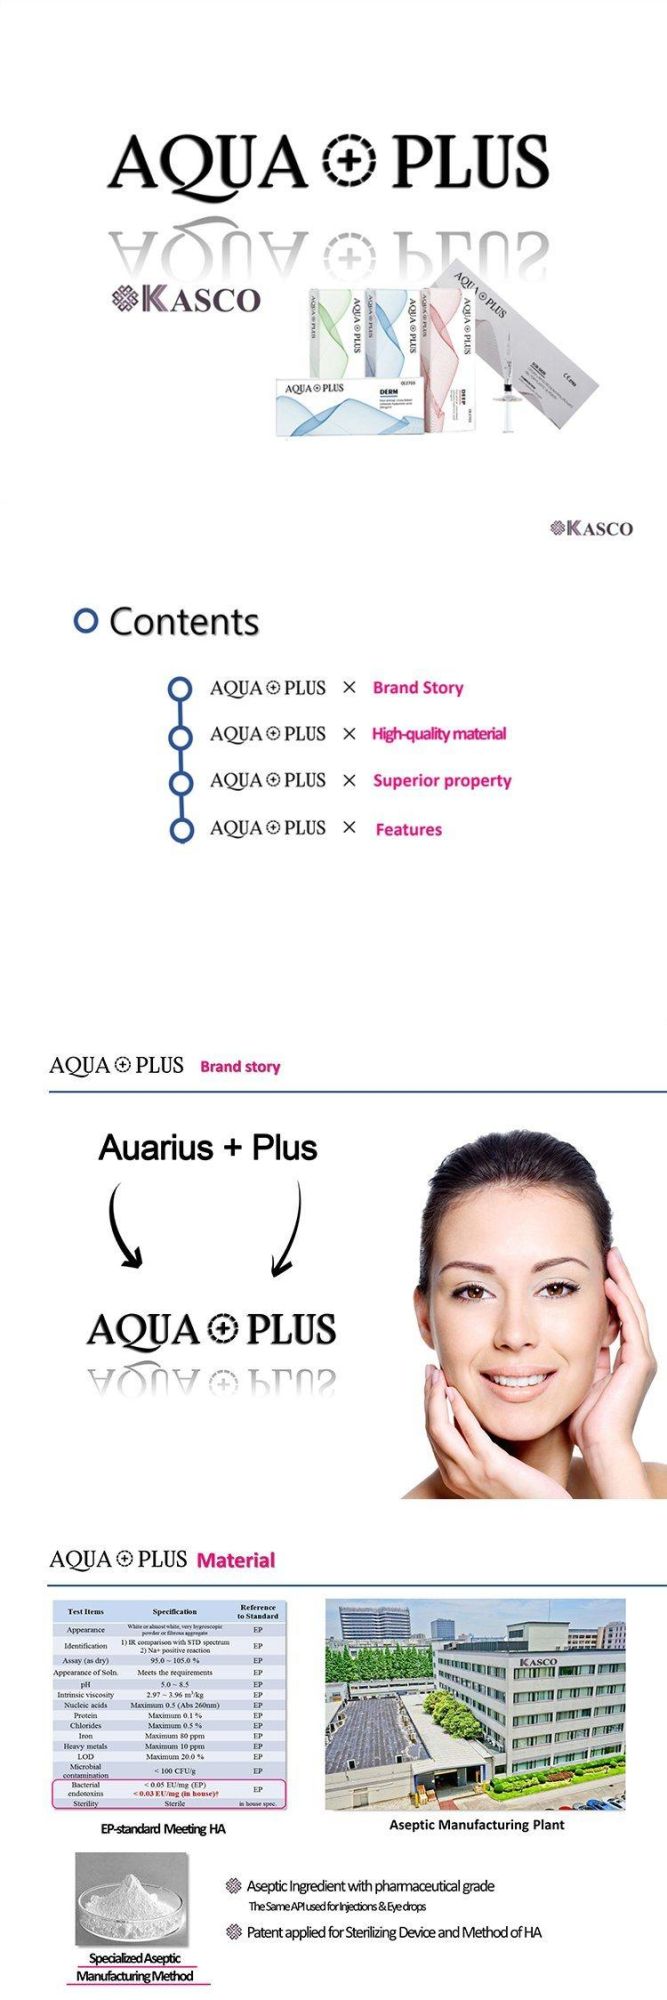 High Quality Aqua Plus Facial Dermal Filler Injectable Cross Linked Hyaluronic Acid